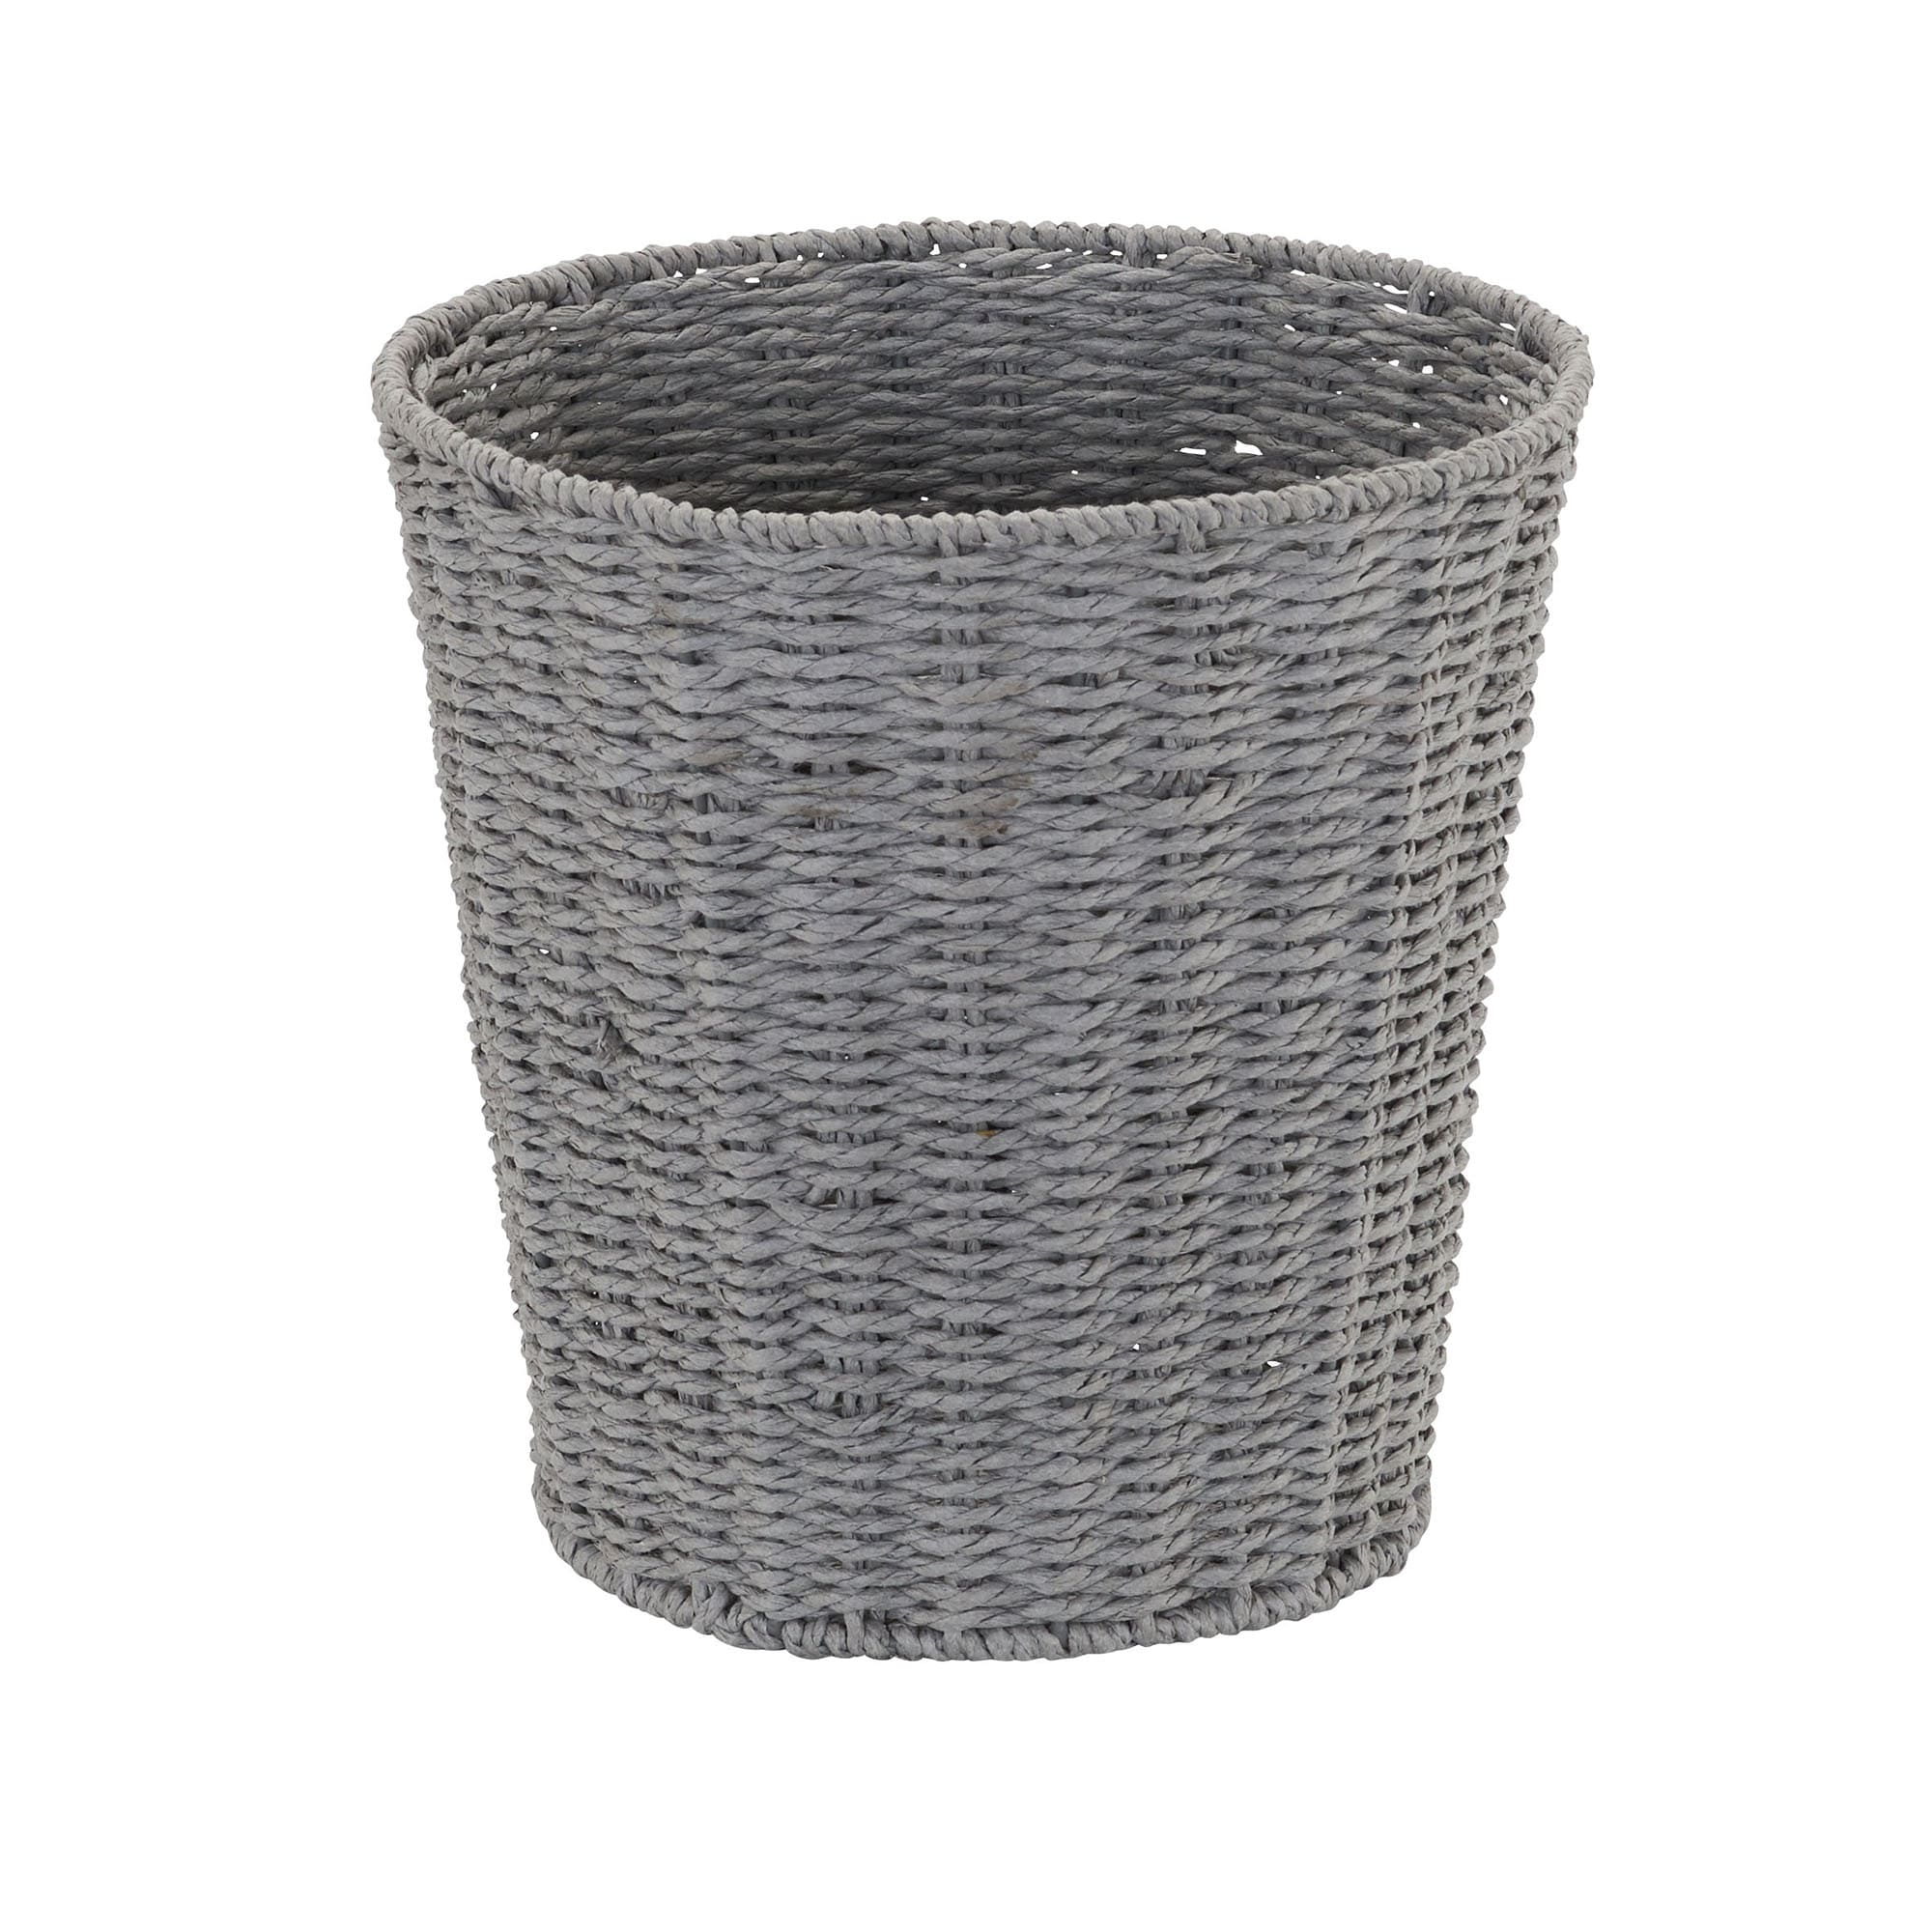 Rattan Round Wastebasket with Metal Liner